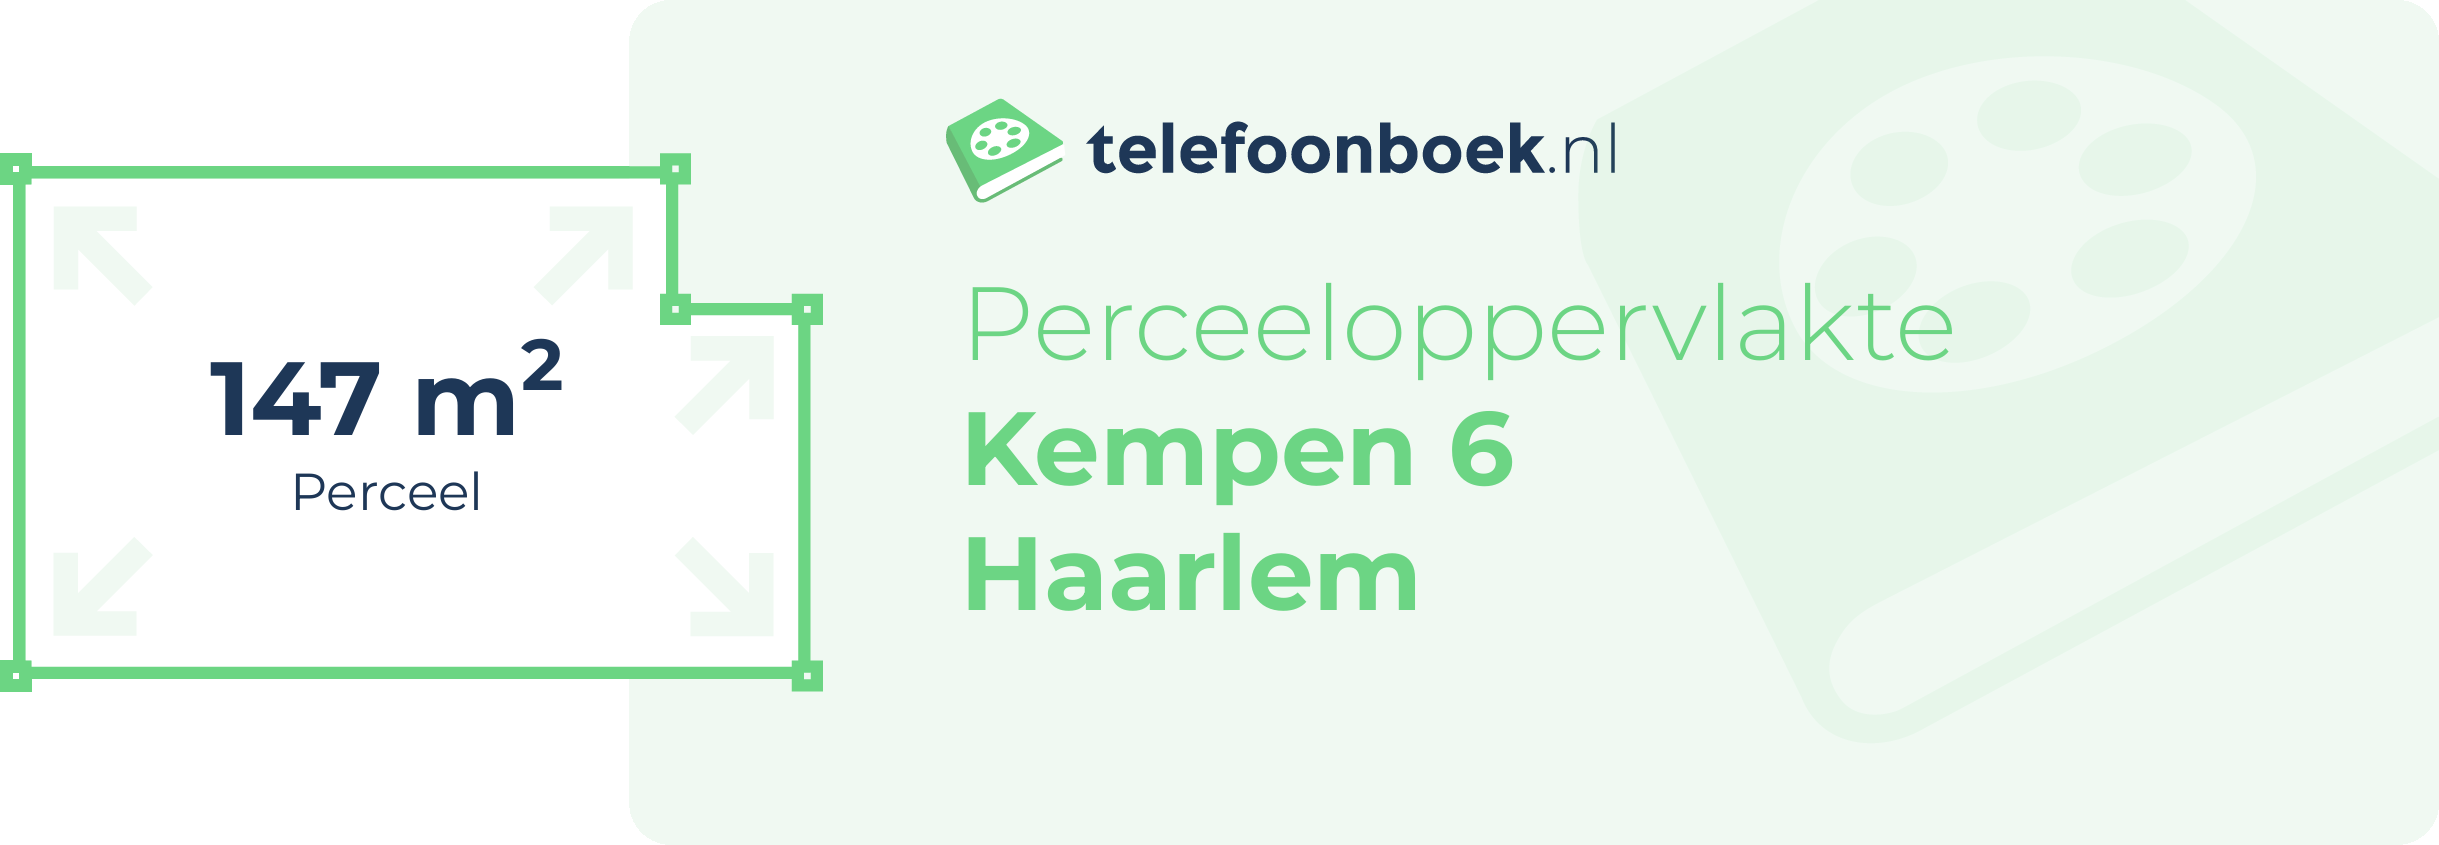 Perceeloppervlakte Kempen 6 Haarlem